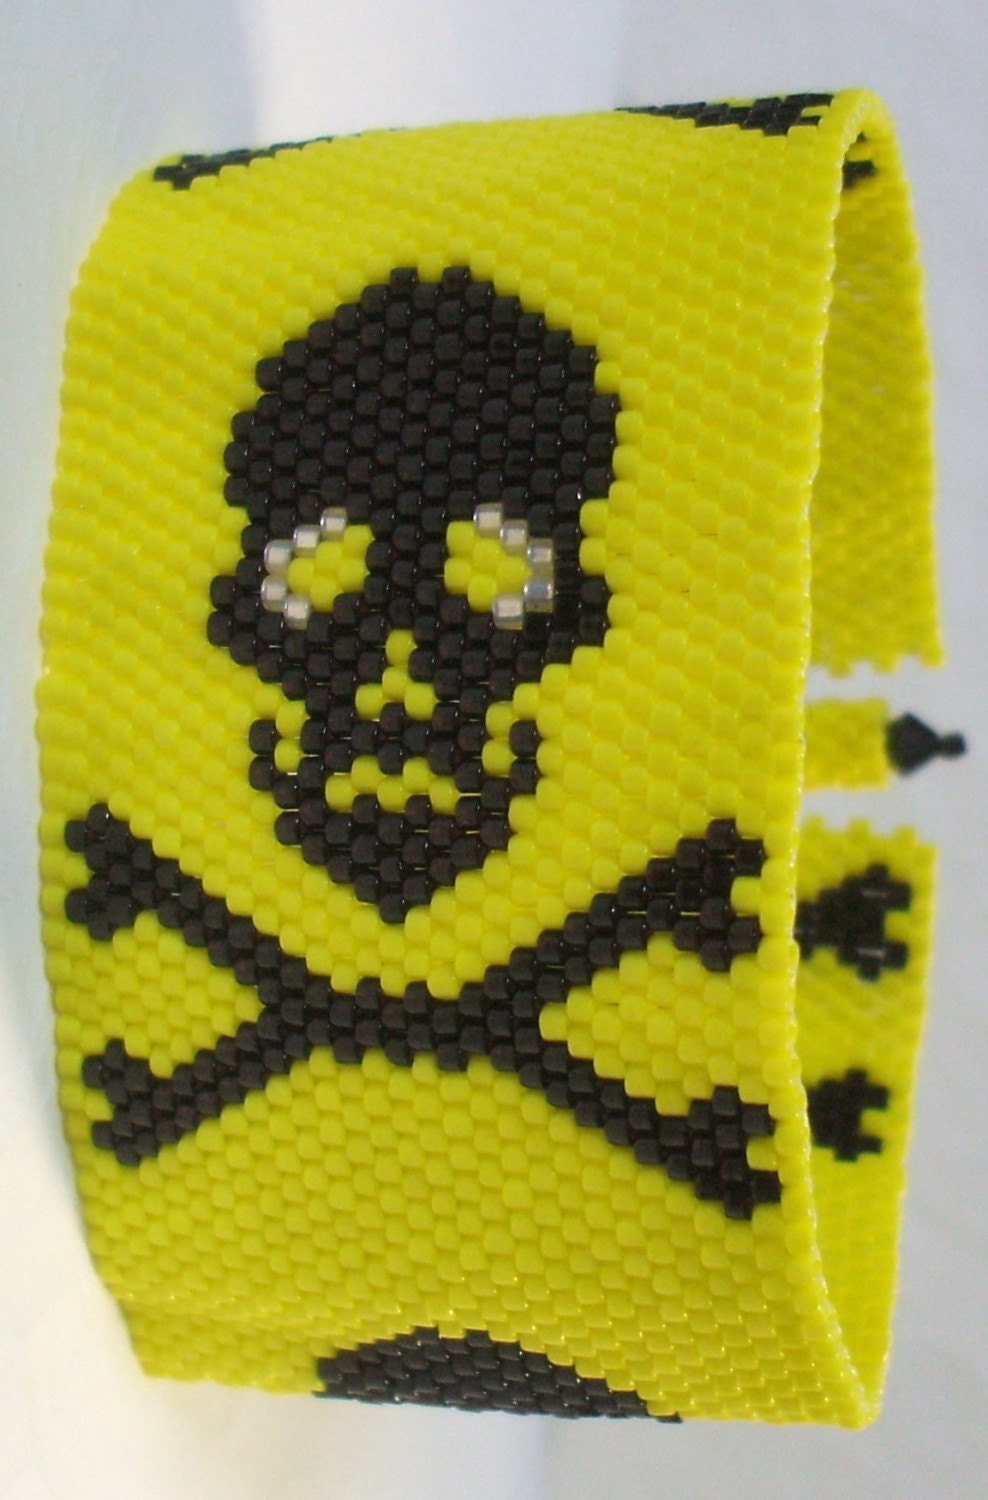 Jolly Roger Pirate Skull And Crossbones Cuff Bracelet